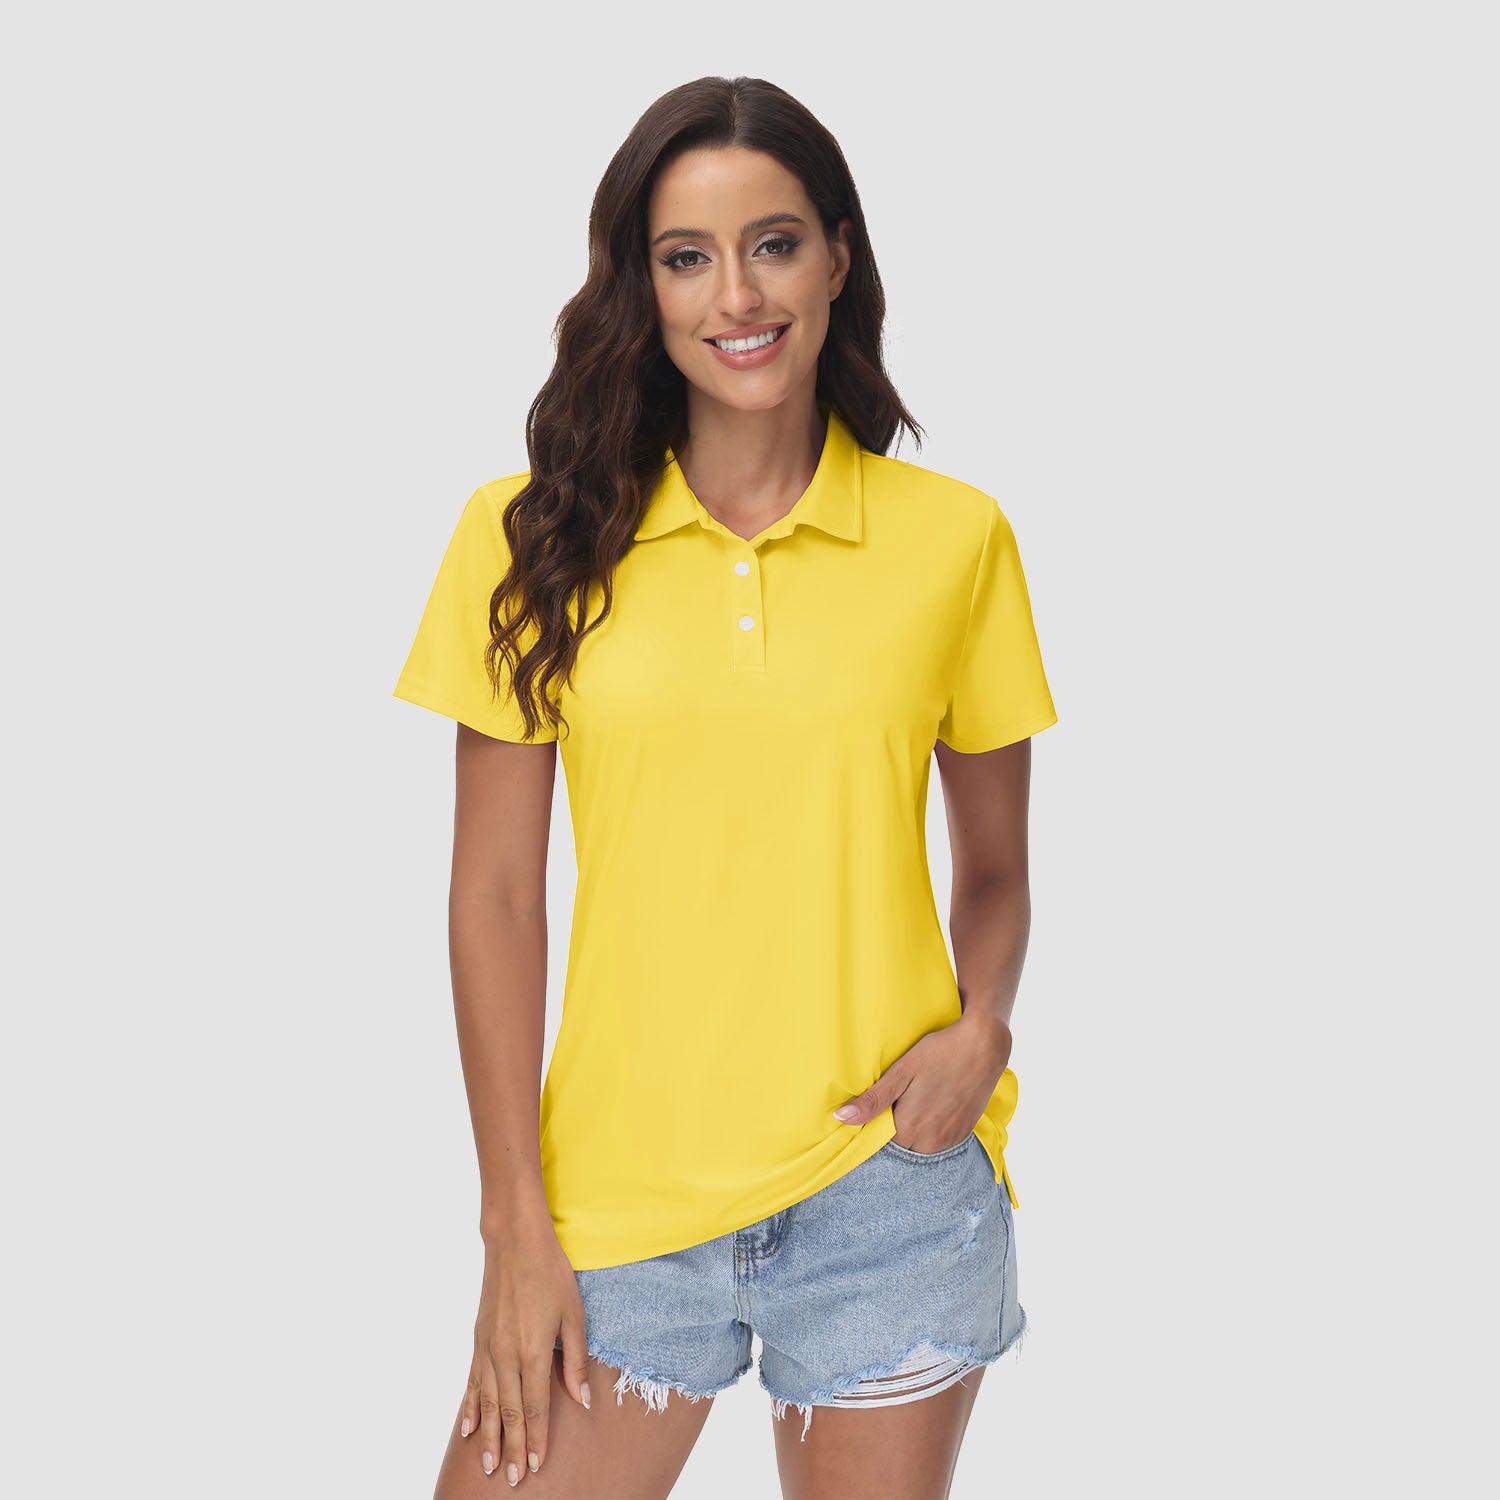 Women's Polo Shirts UPF 50+ Sun Protection Short Sleeve Golf Shirt Quick Dry